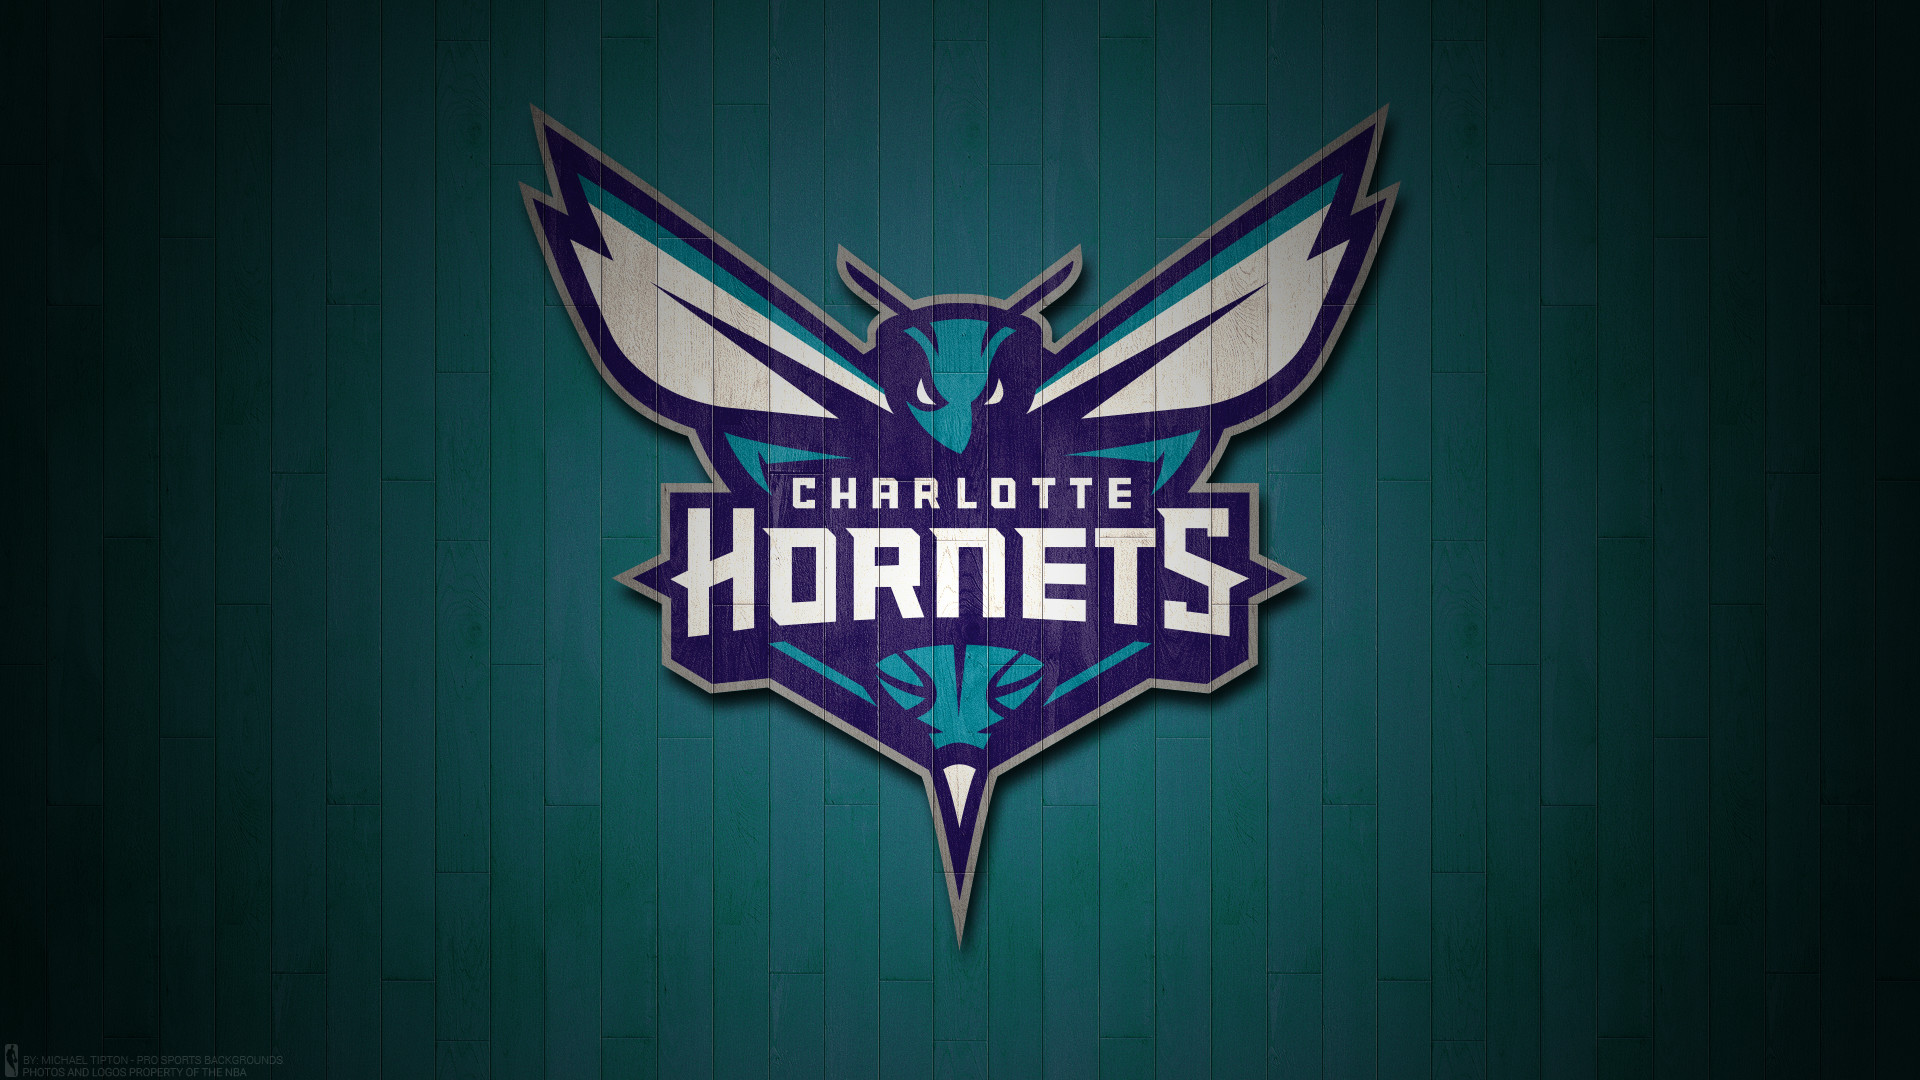 1920x1080 Charlotte Hornets 2017 nba basketball logo wallpaper pc desktop computer